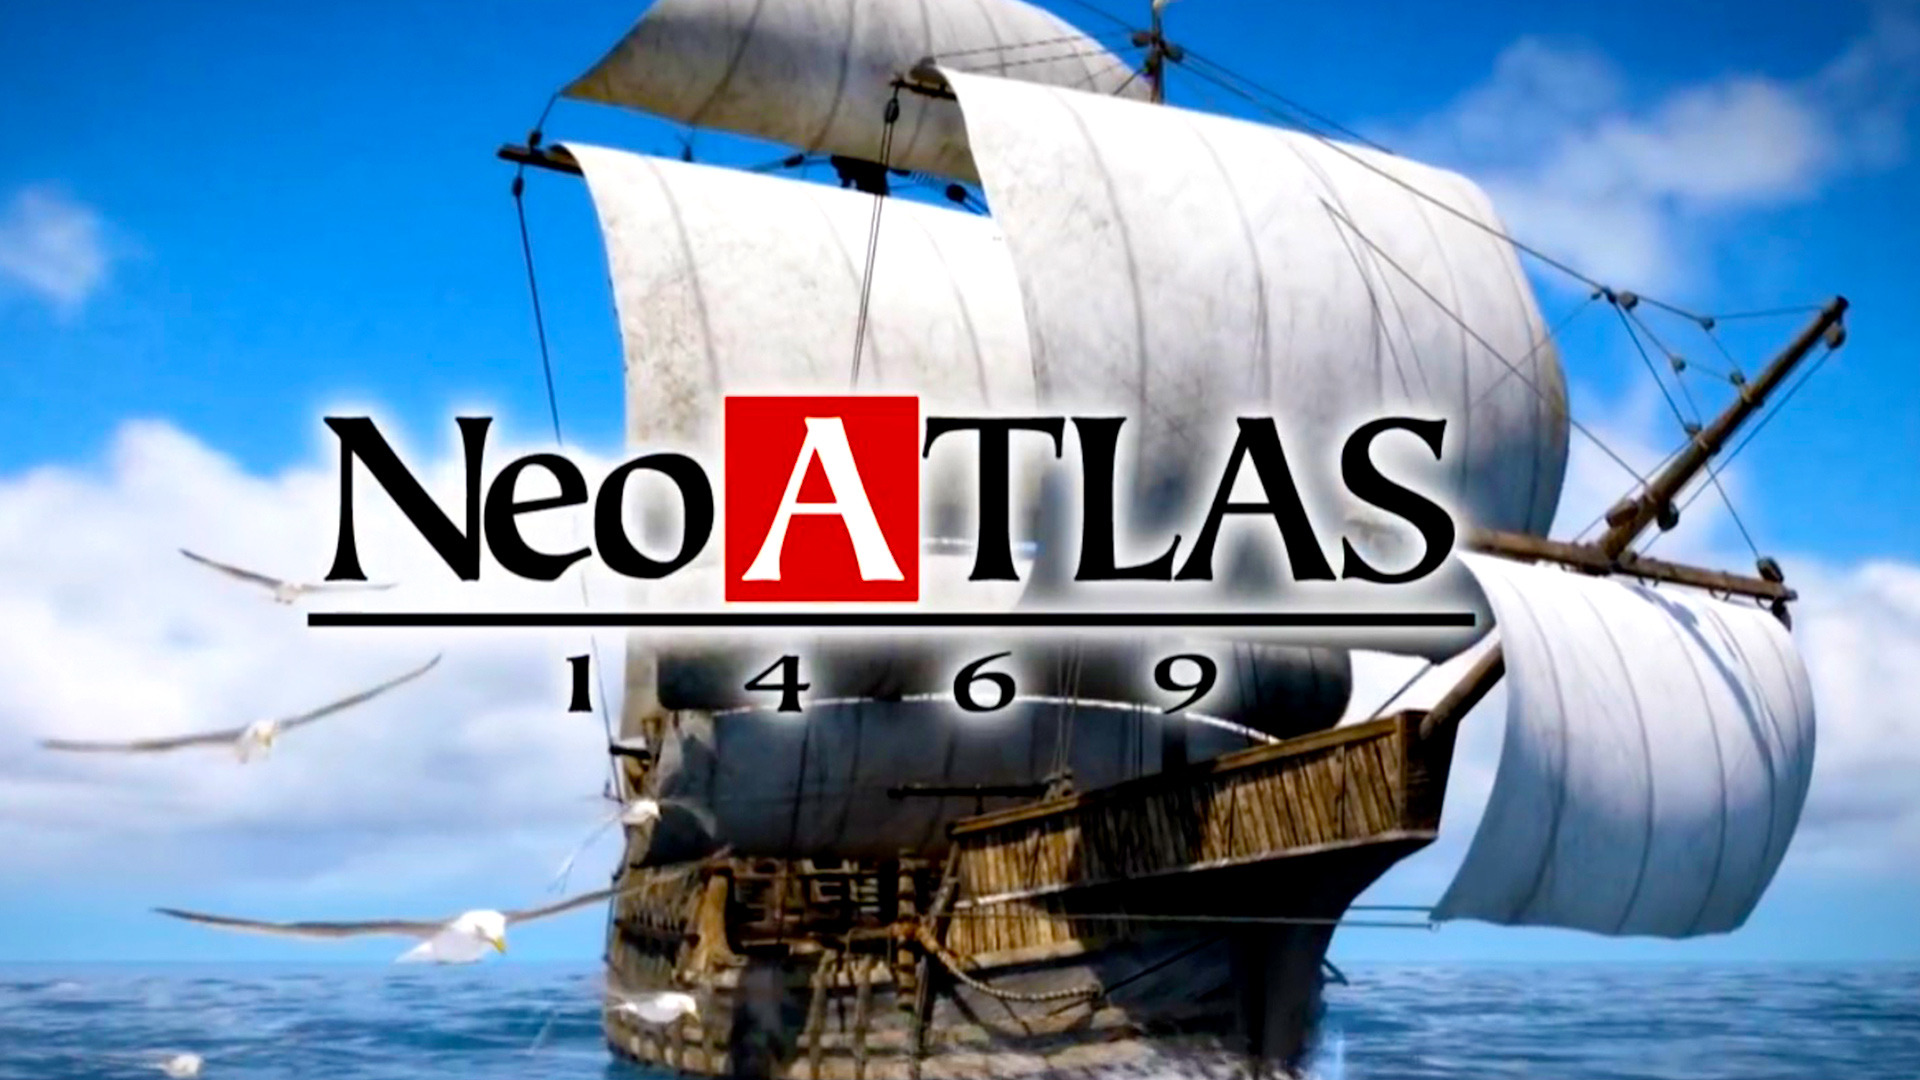 Neo Atlas Steam Trailer